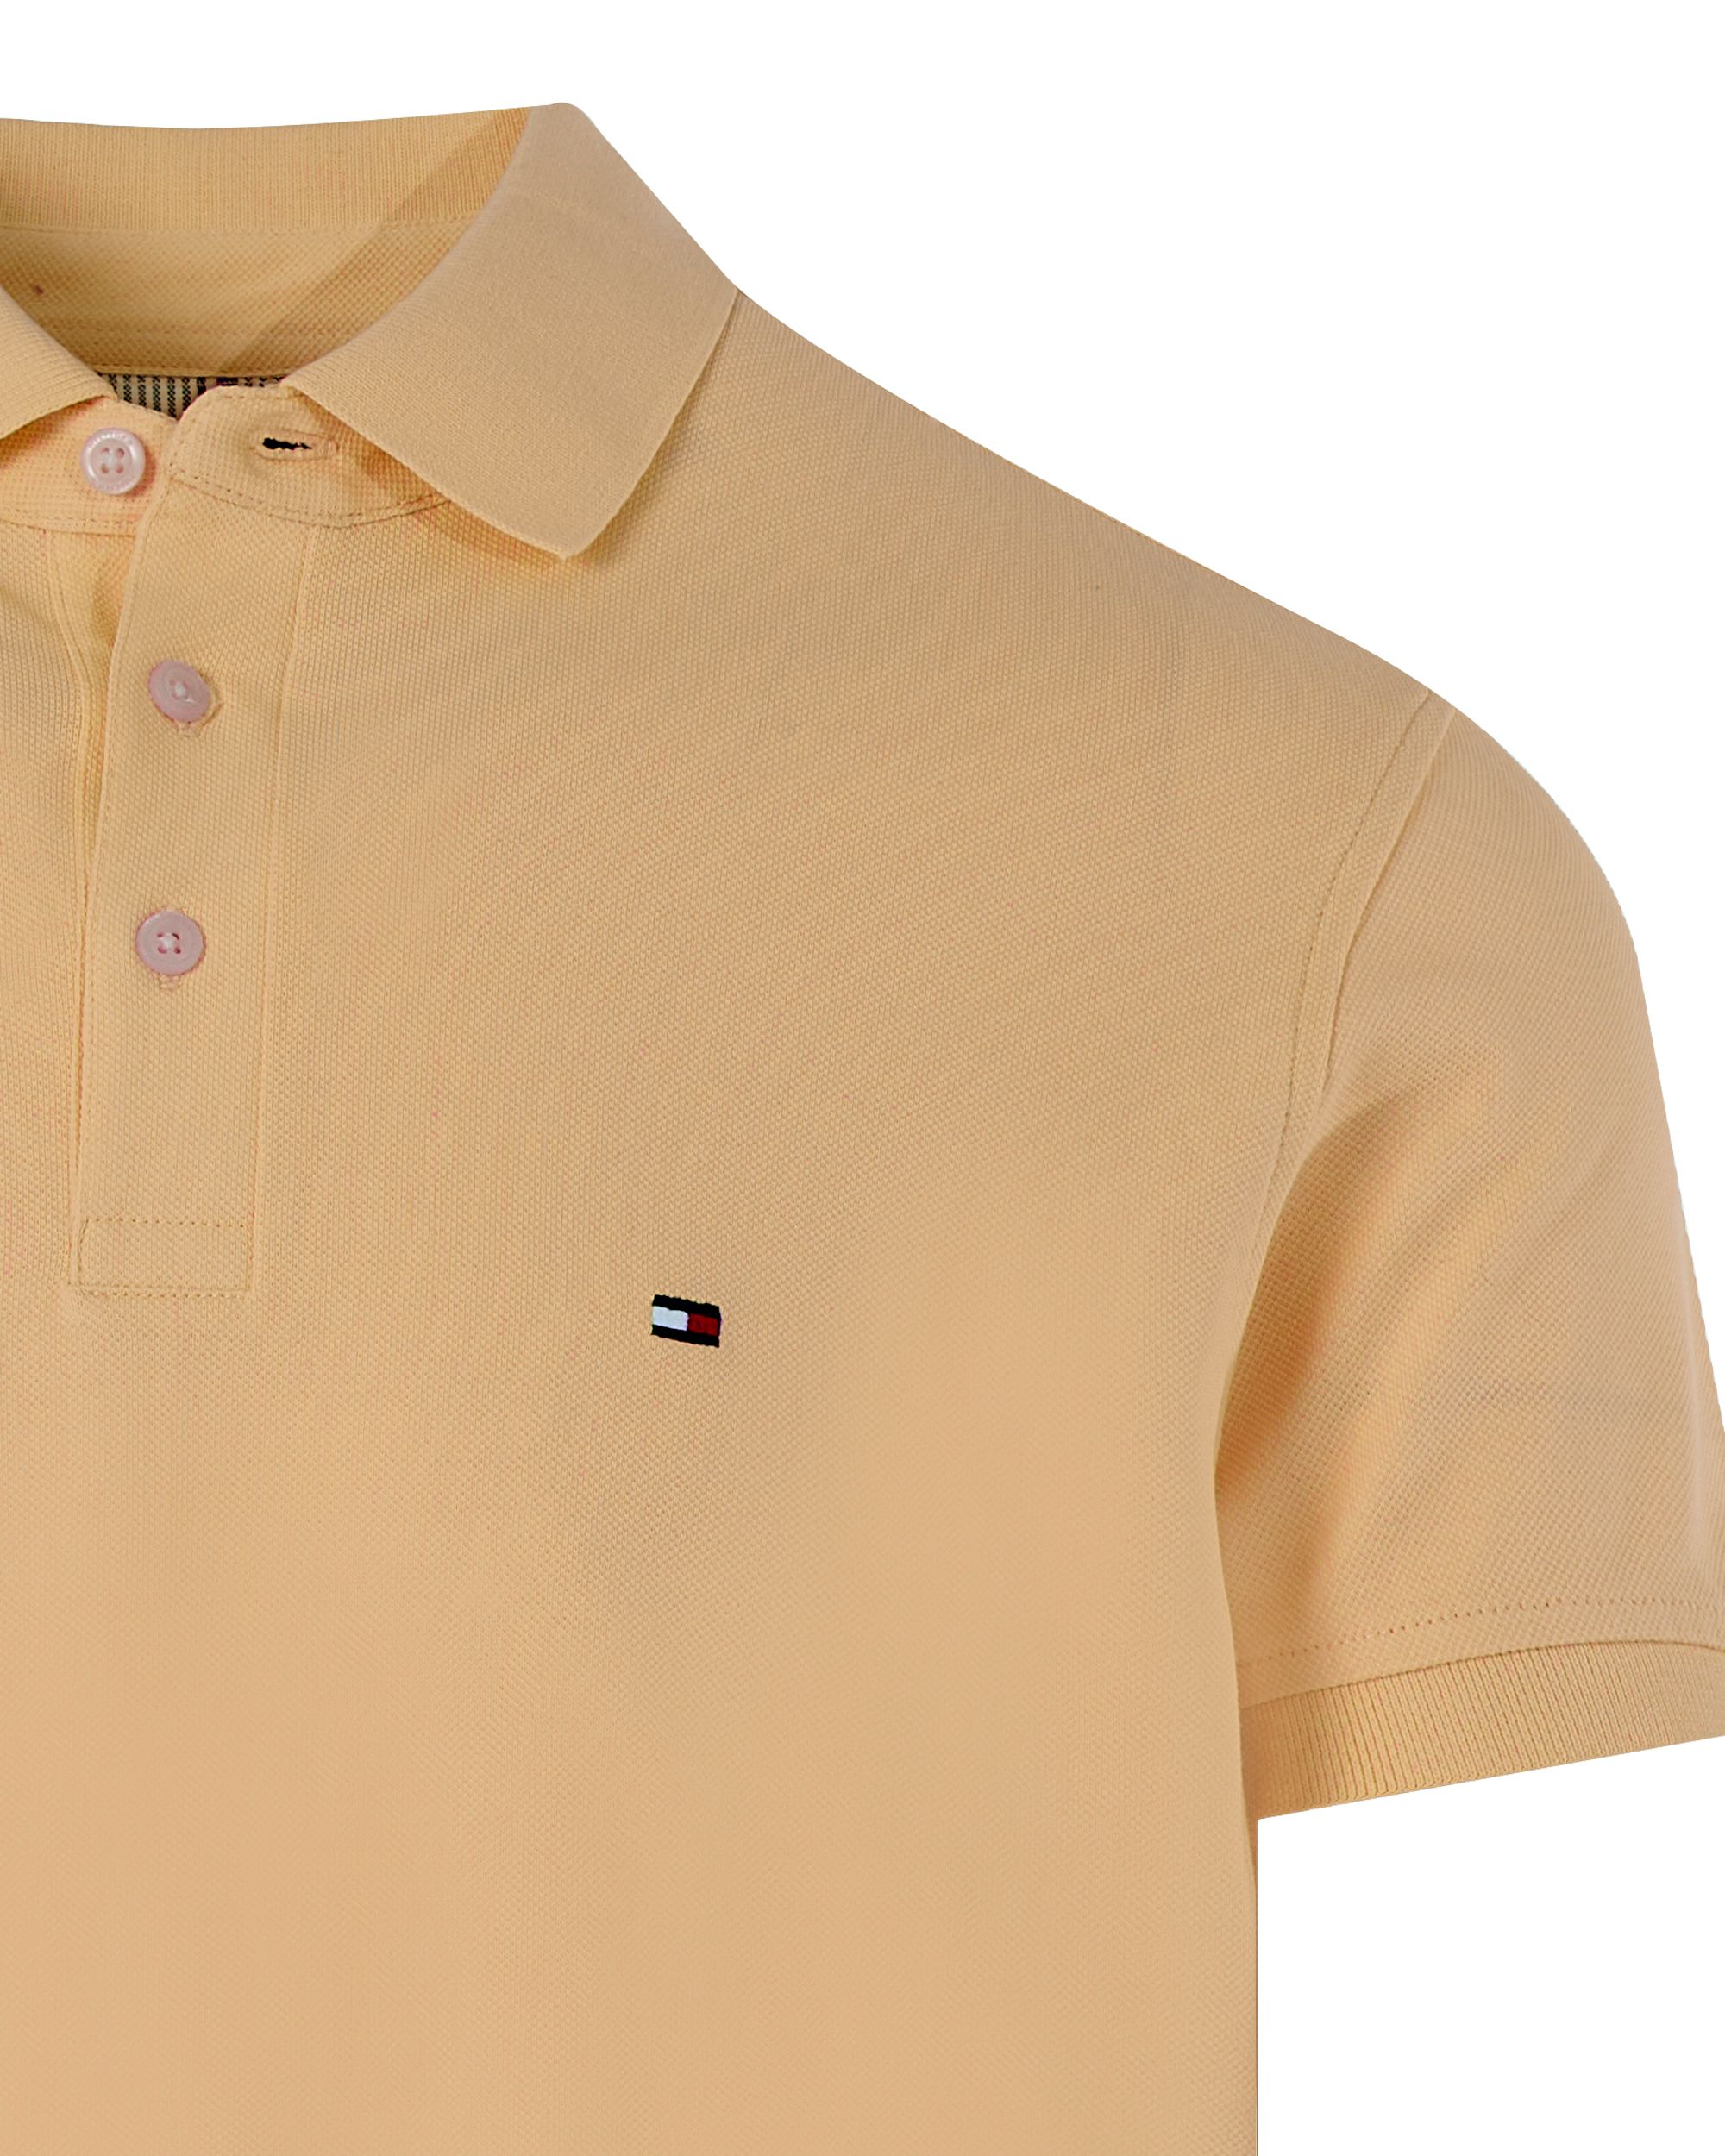 Tommy Hilfiger Menswear Polo KM Oranje 094653-001-L